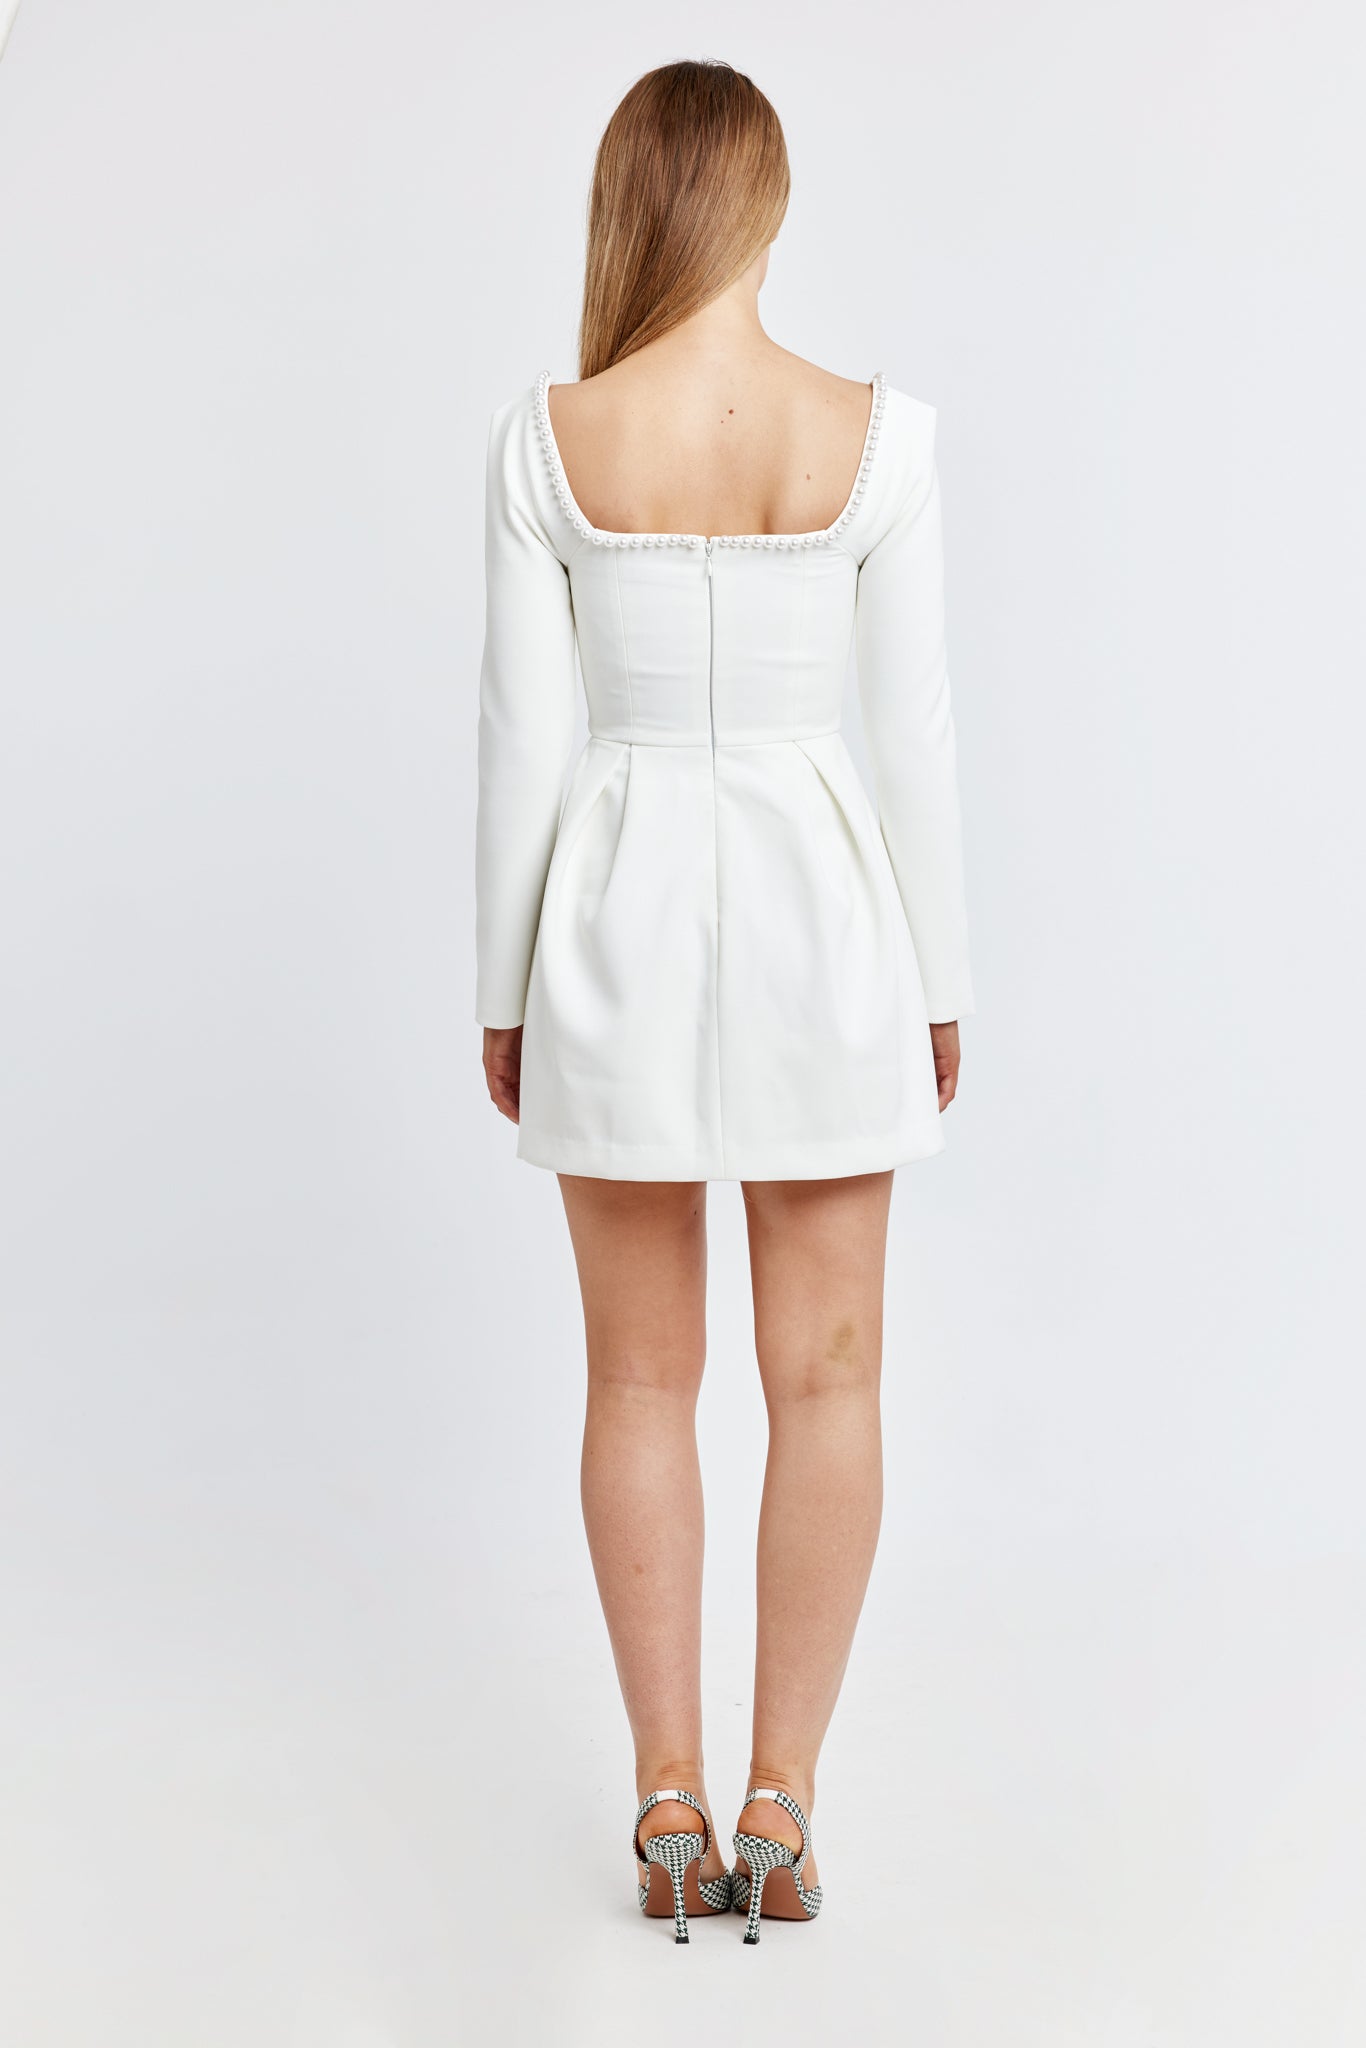 Pearl Adjustable Strap Tennis Dress - White